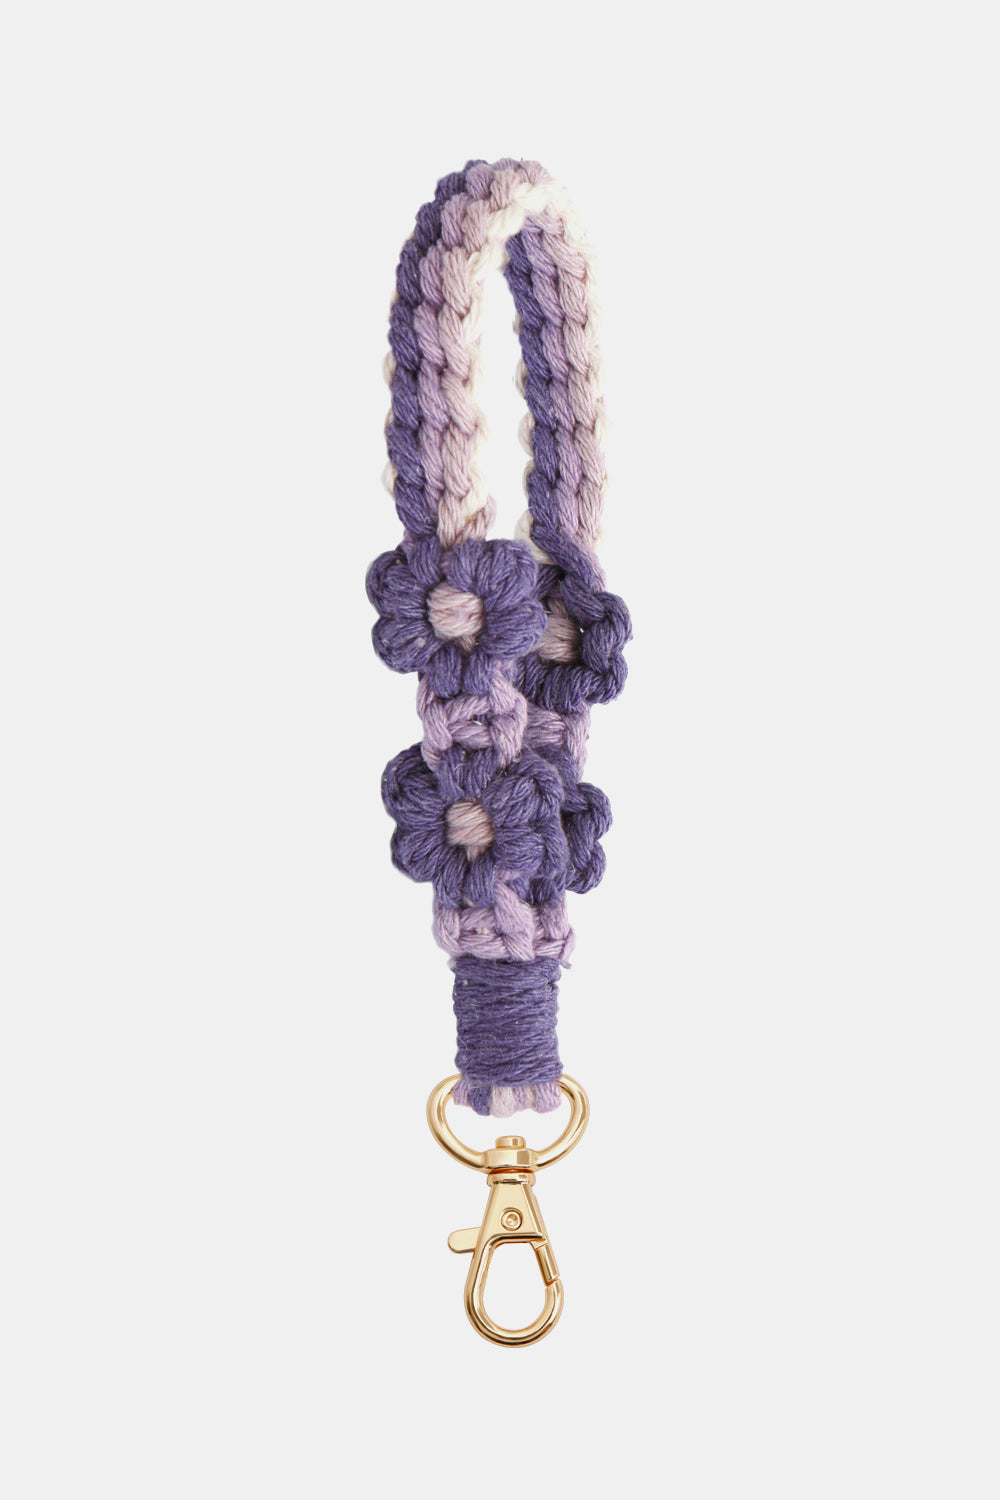 Trendsi Cupid Beauty Supplies Dusty Purple / One Size Keychains Flower Shape Wristlet Zinc Alloy Closure Macrame Key Chain